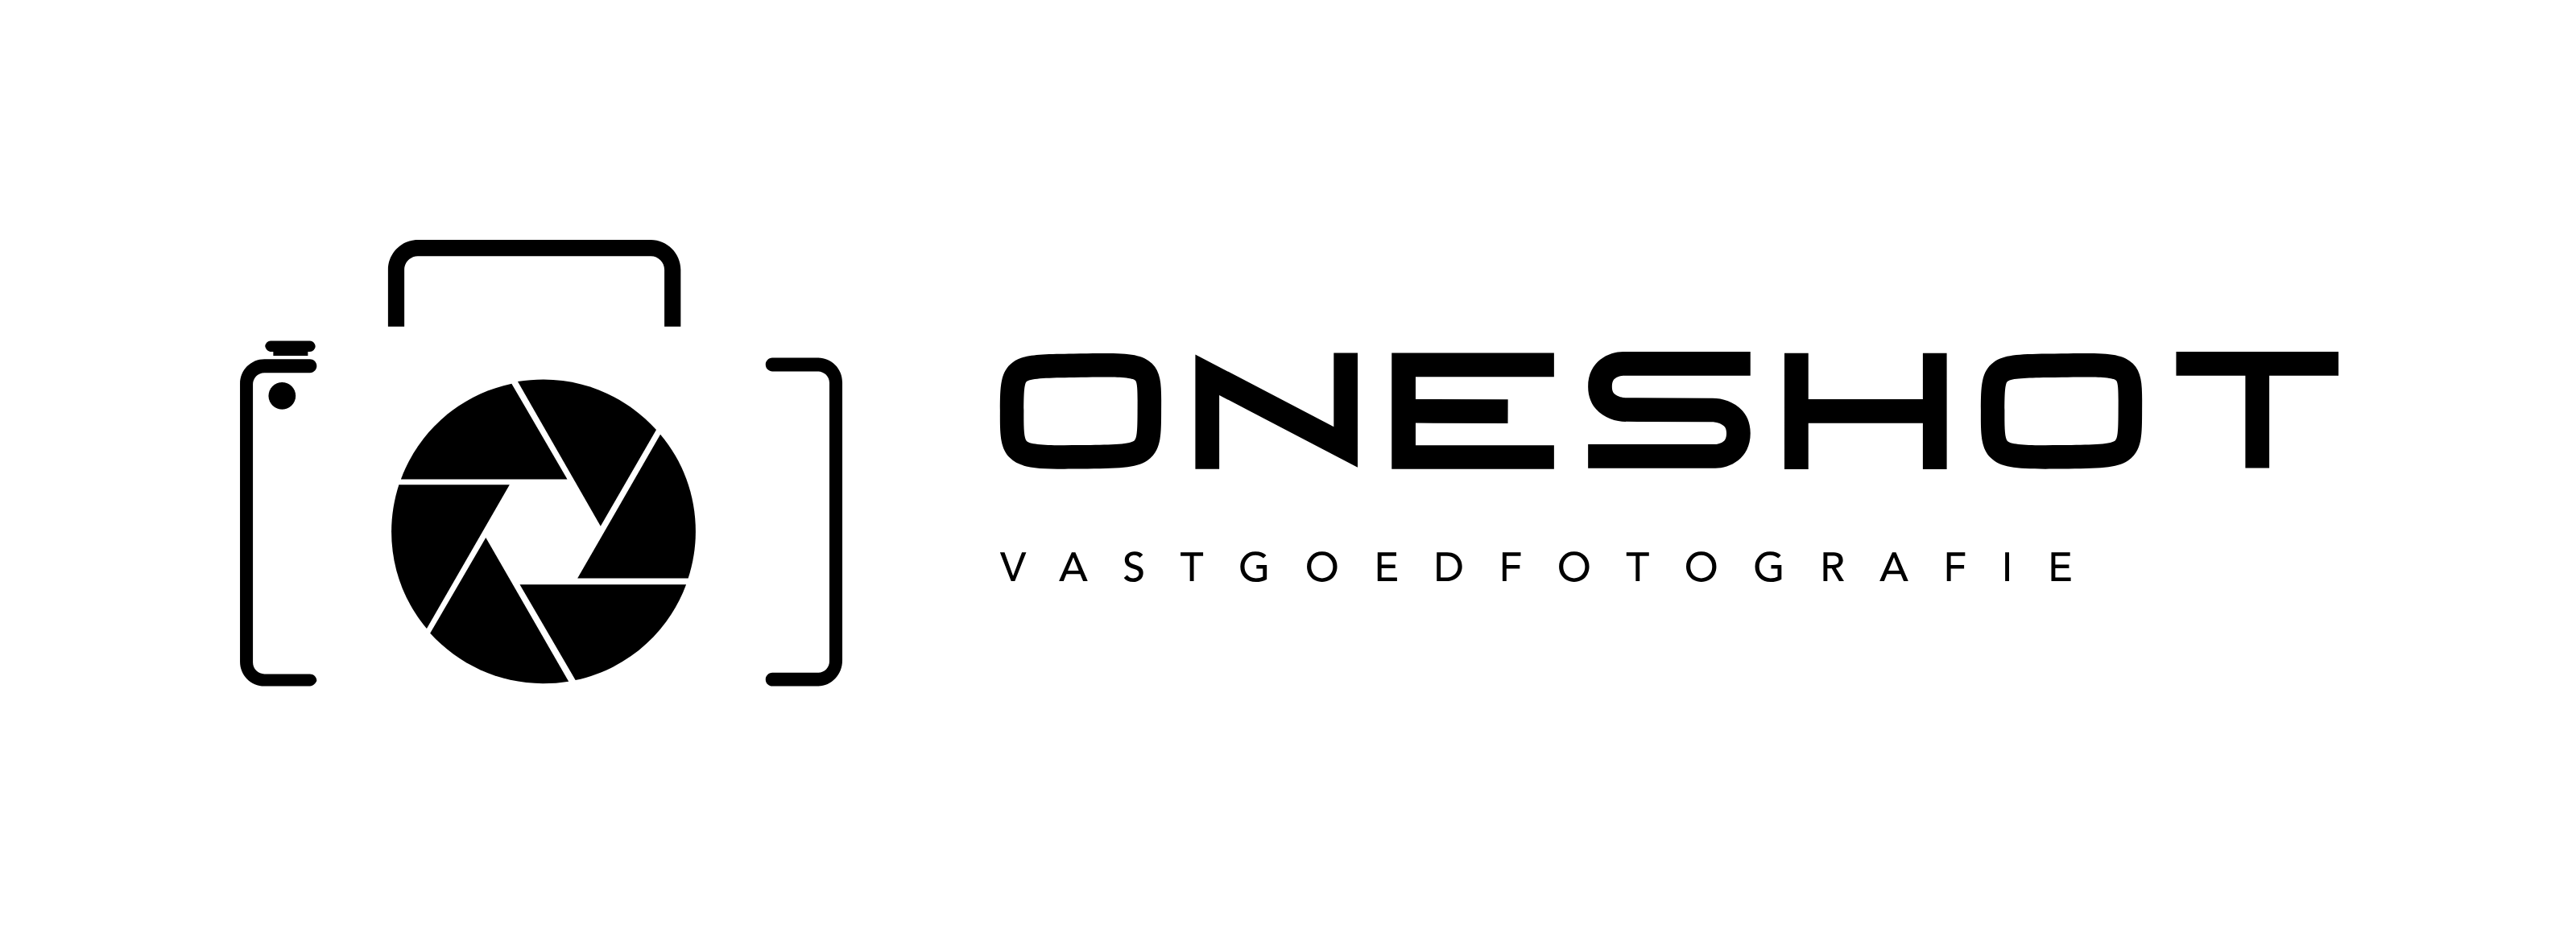 Oneshot vastgoedfotografie friesland - logo wit